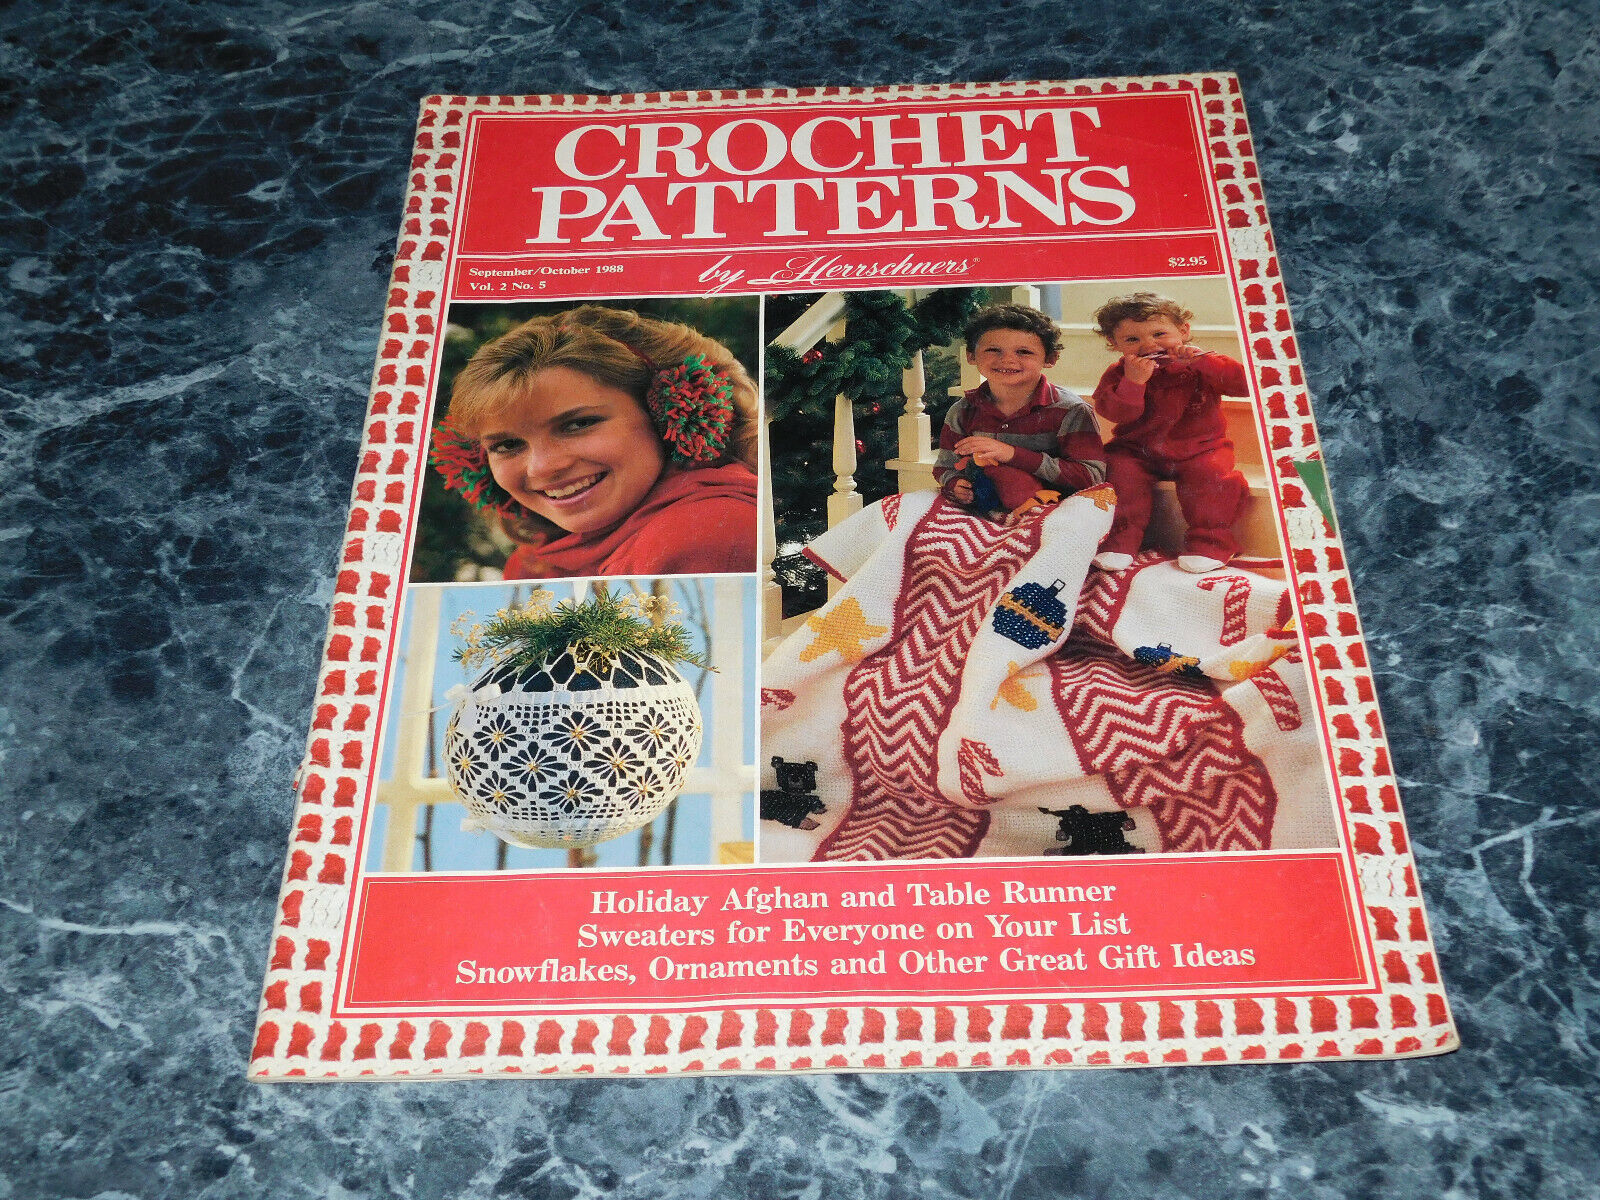 Crochet Patterns Magazine September October 1988 by Herrschners - $2.99